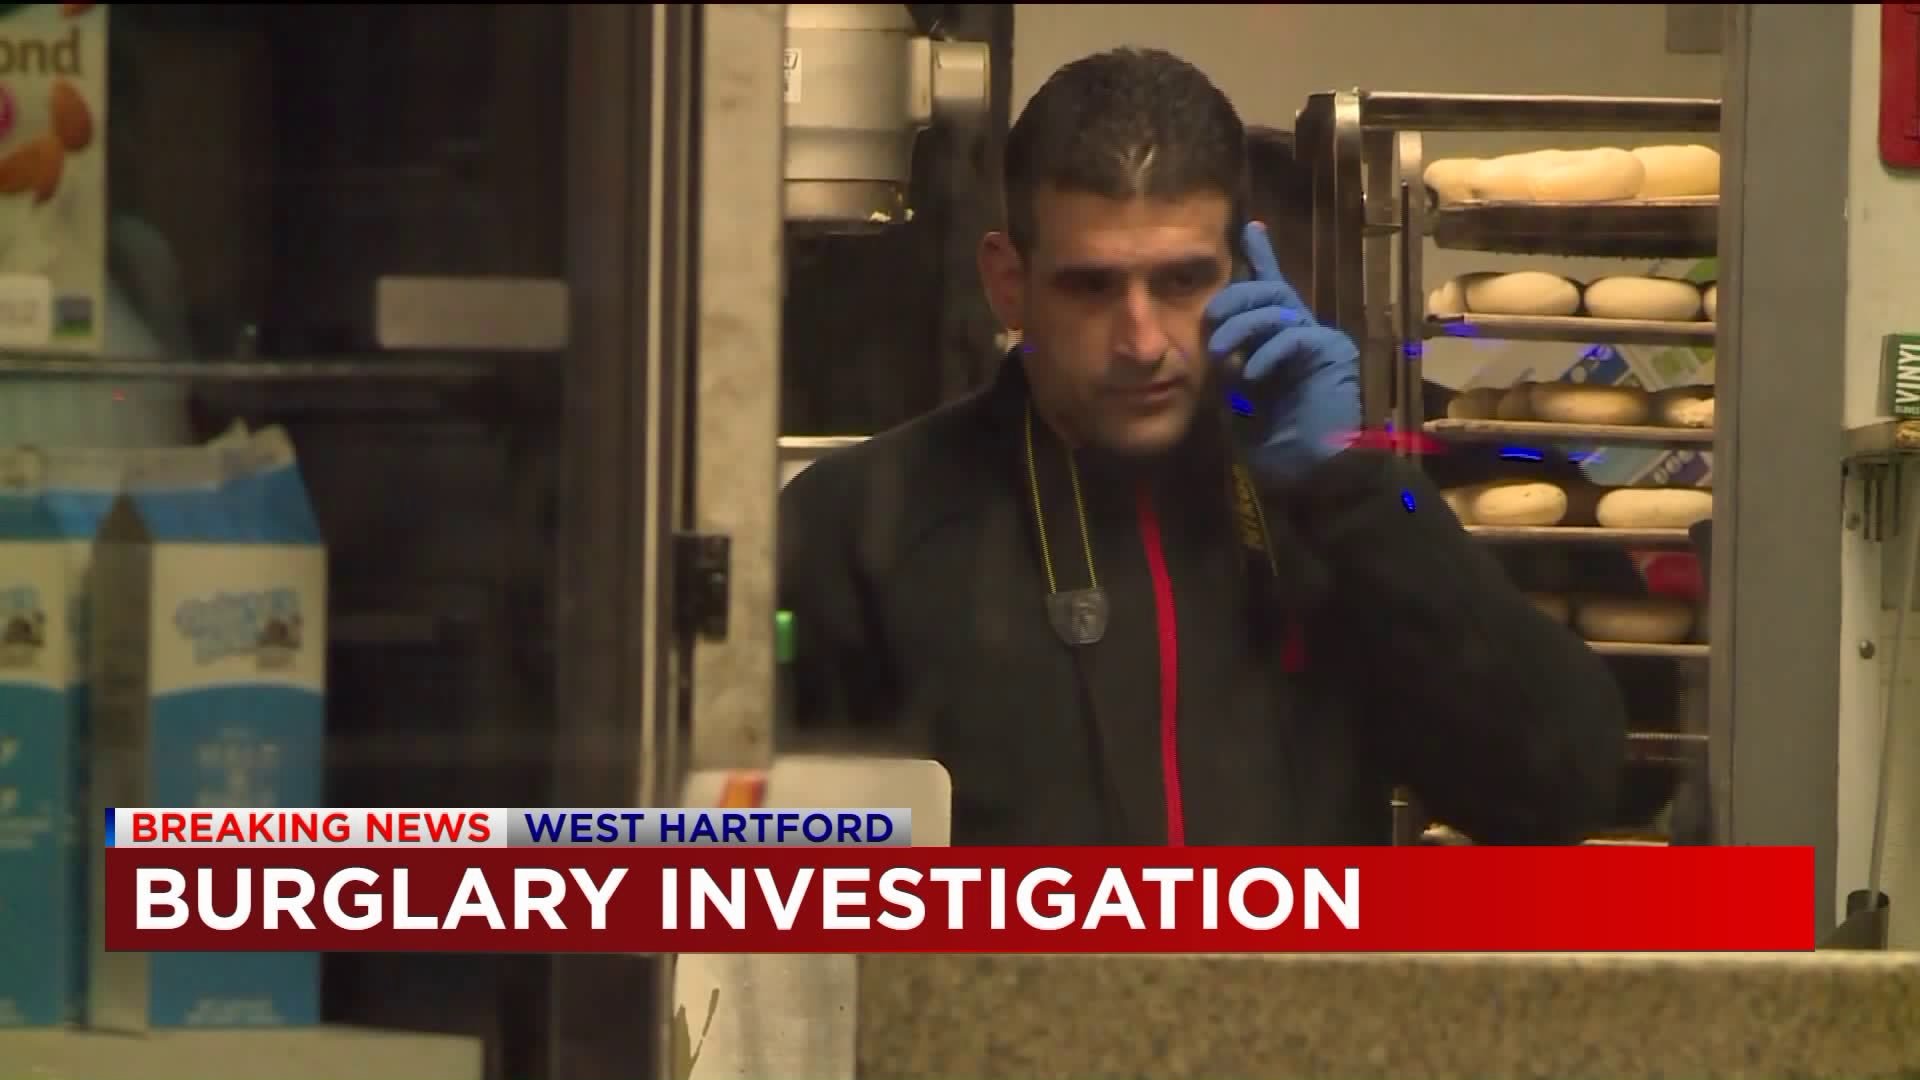 West Hartford burglary investigation